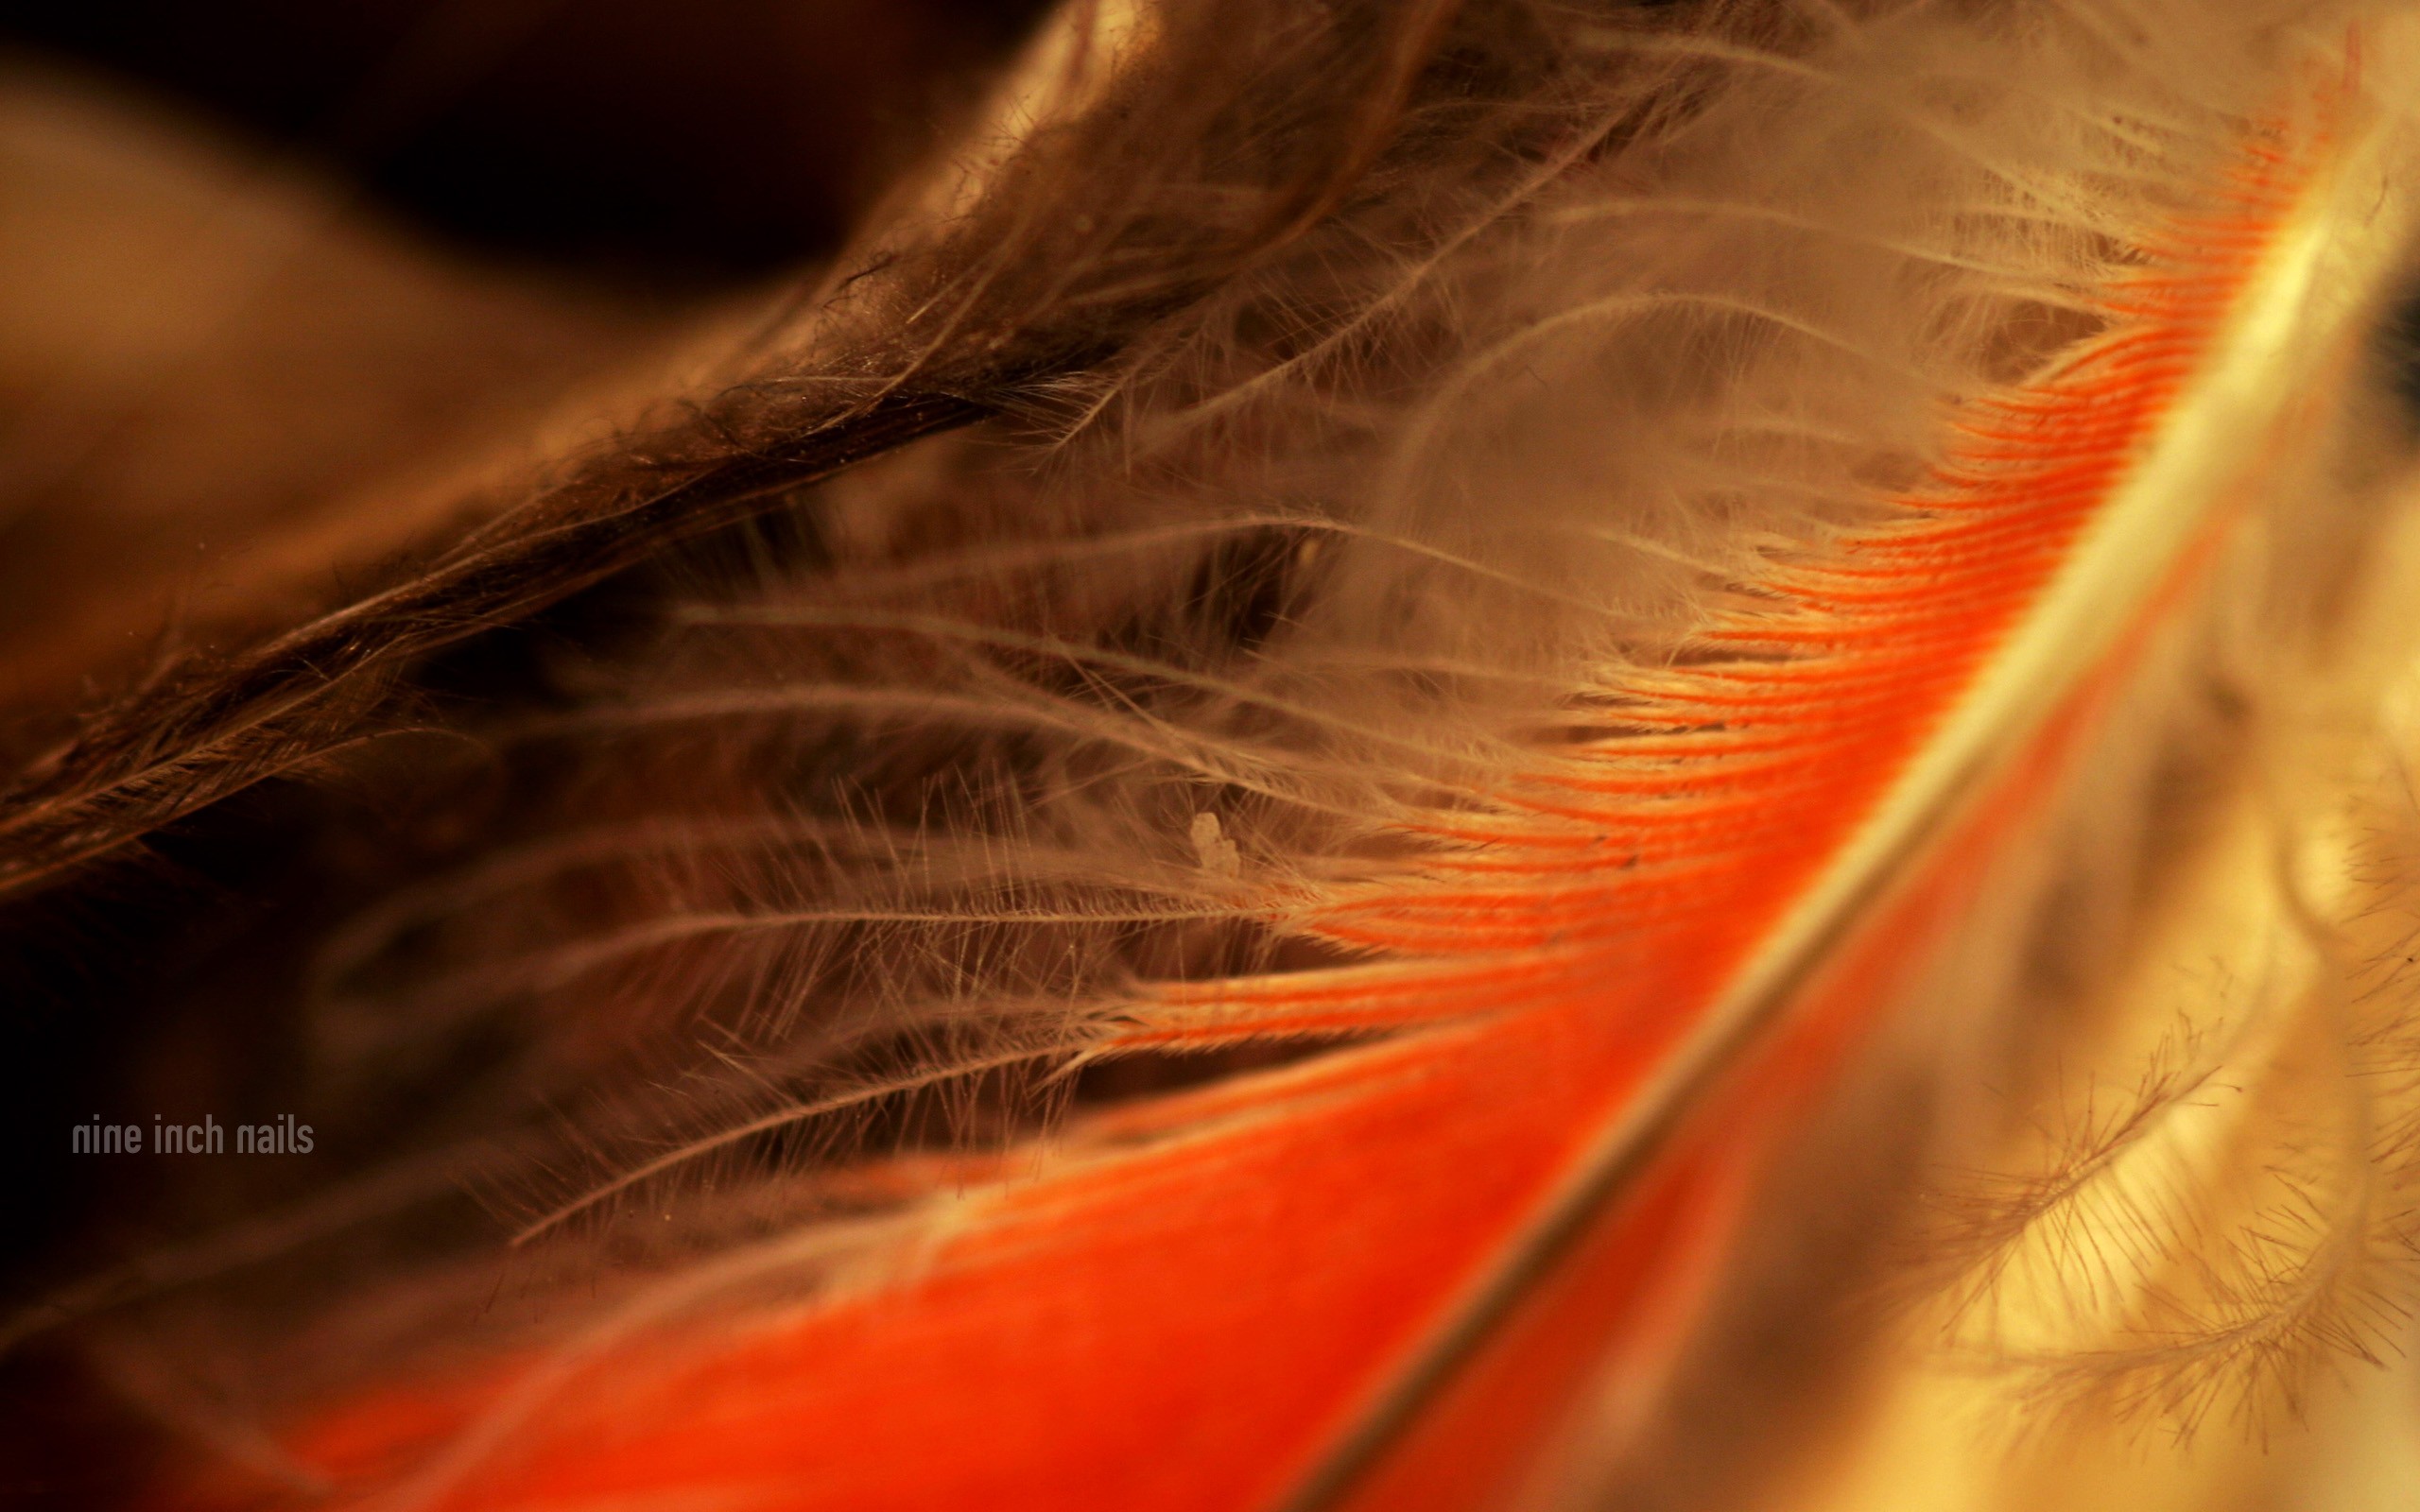 5.5 inch hd wallpaper,feather,orange,close up,macro photography,eye